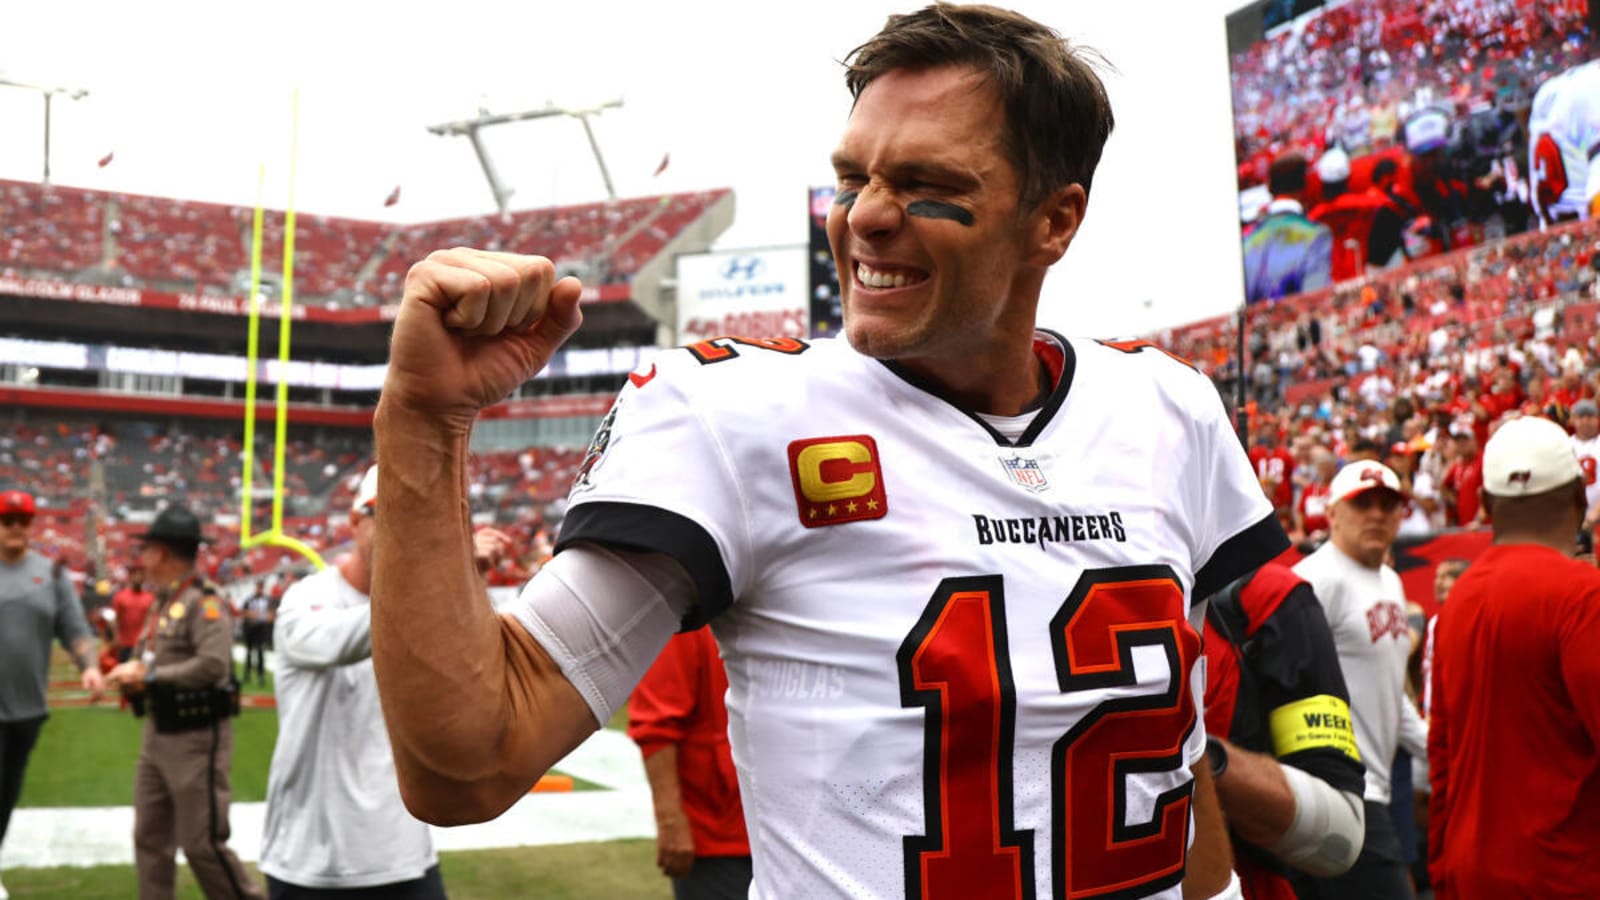 Game Worn Tom Brady Buccaneers Jersey Sells For Insane $1.2 Million Price